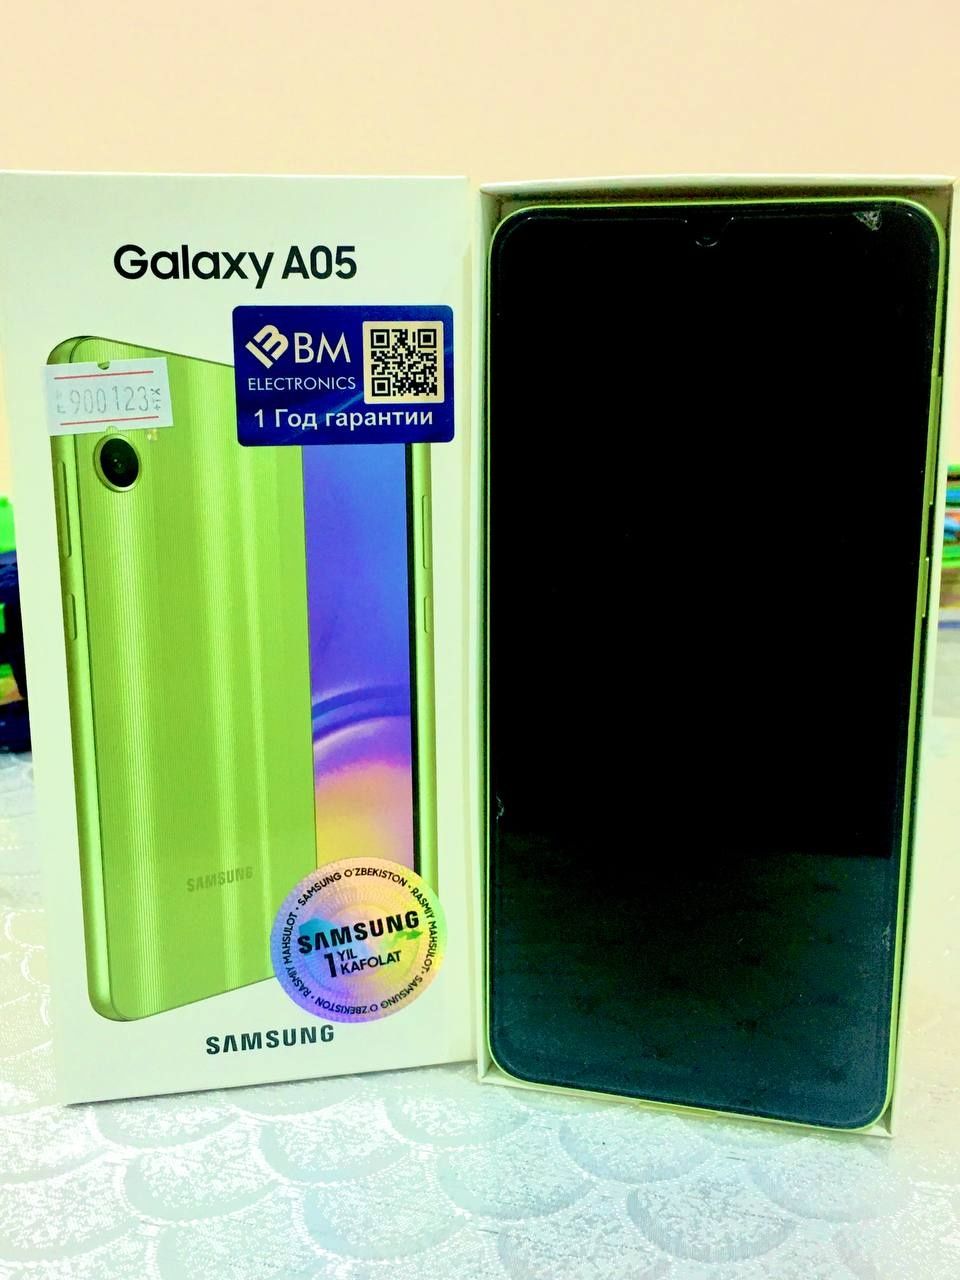 SamsungA05 holati yangi